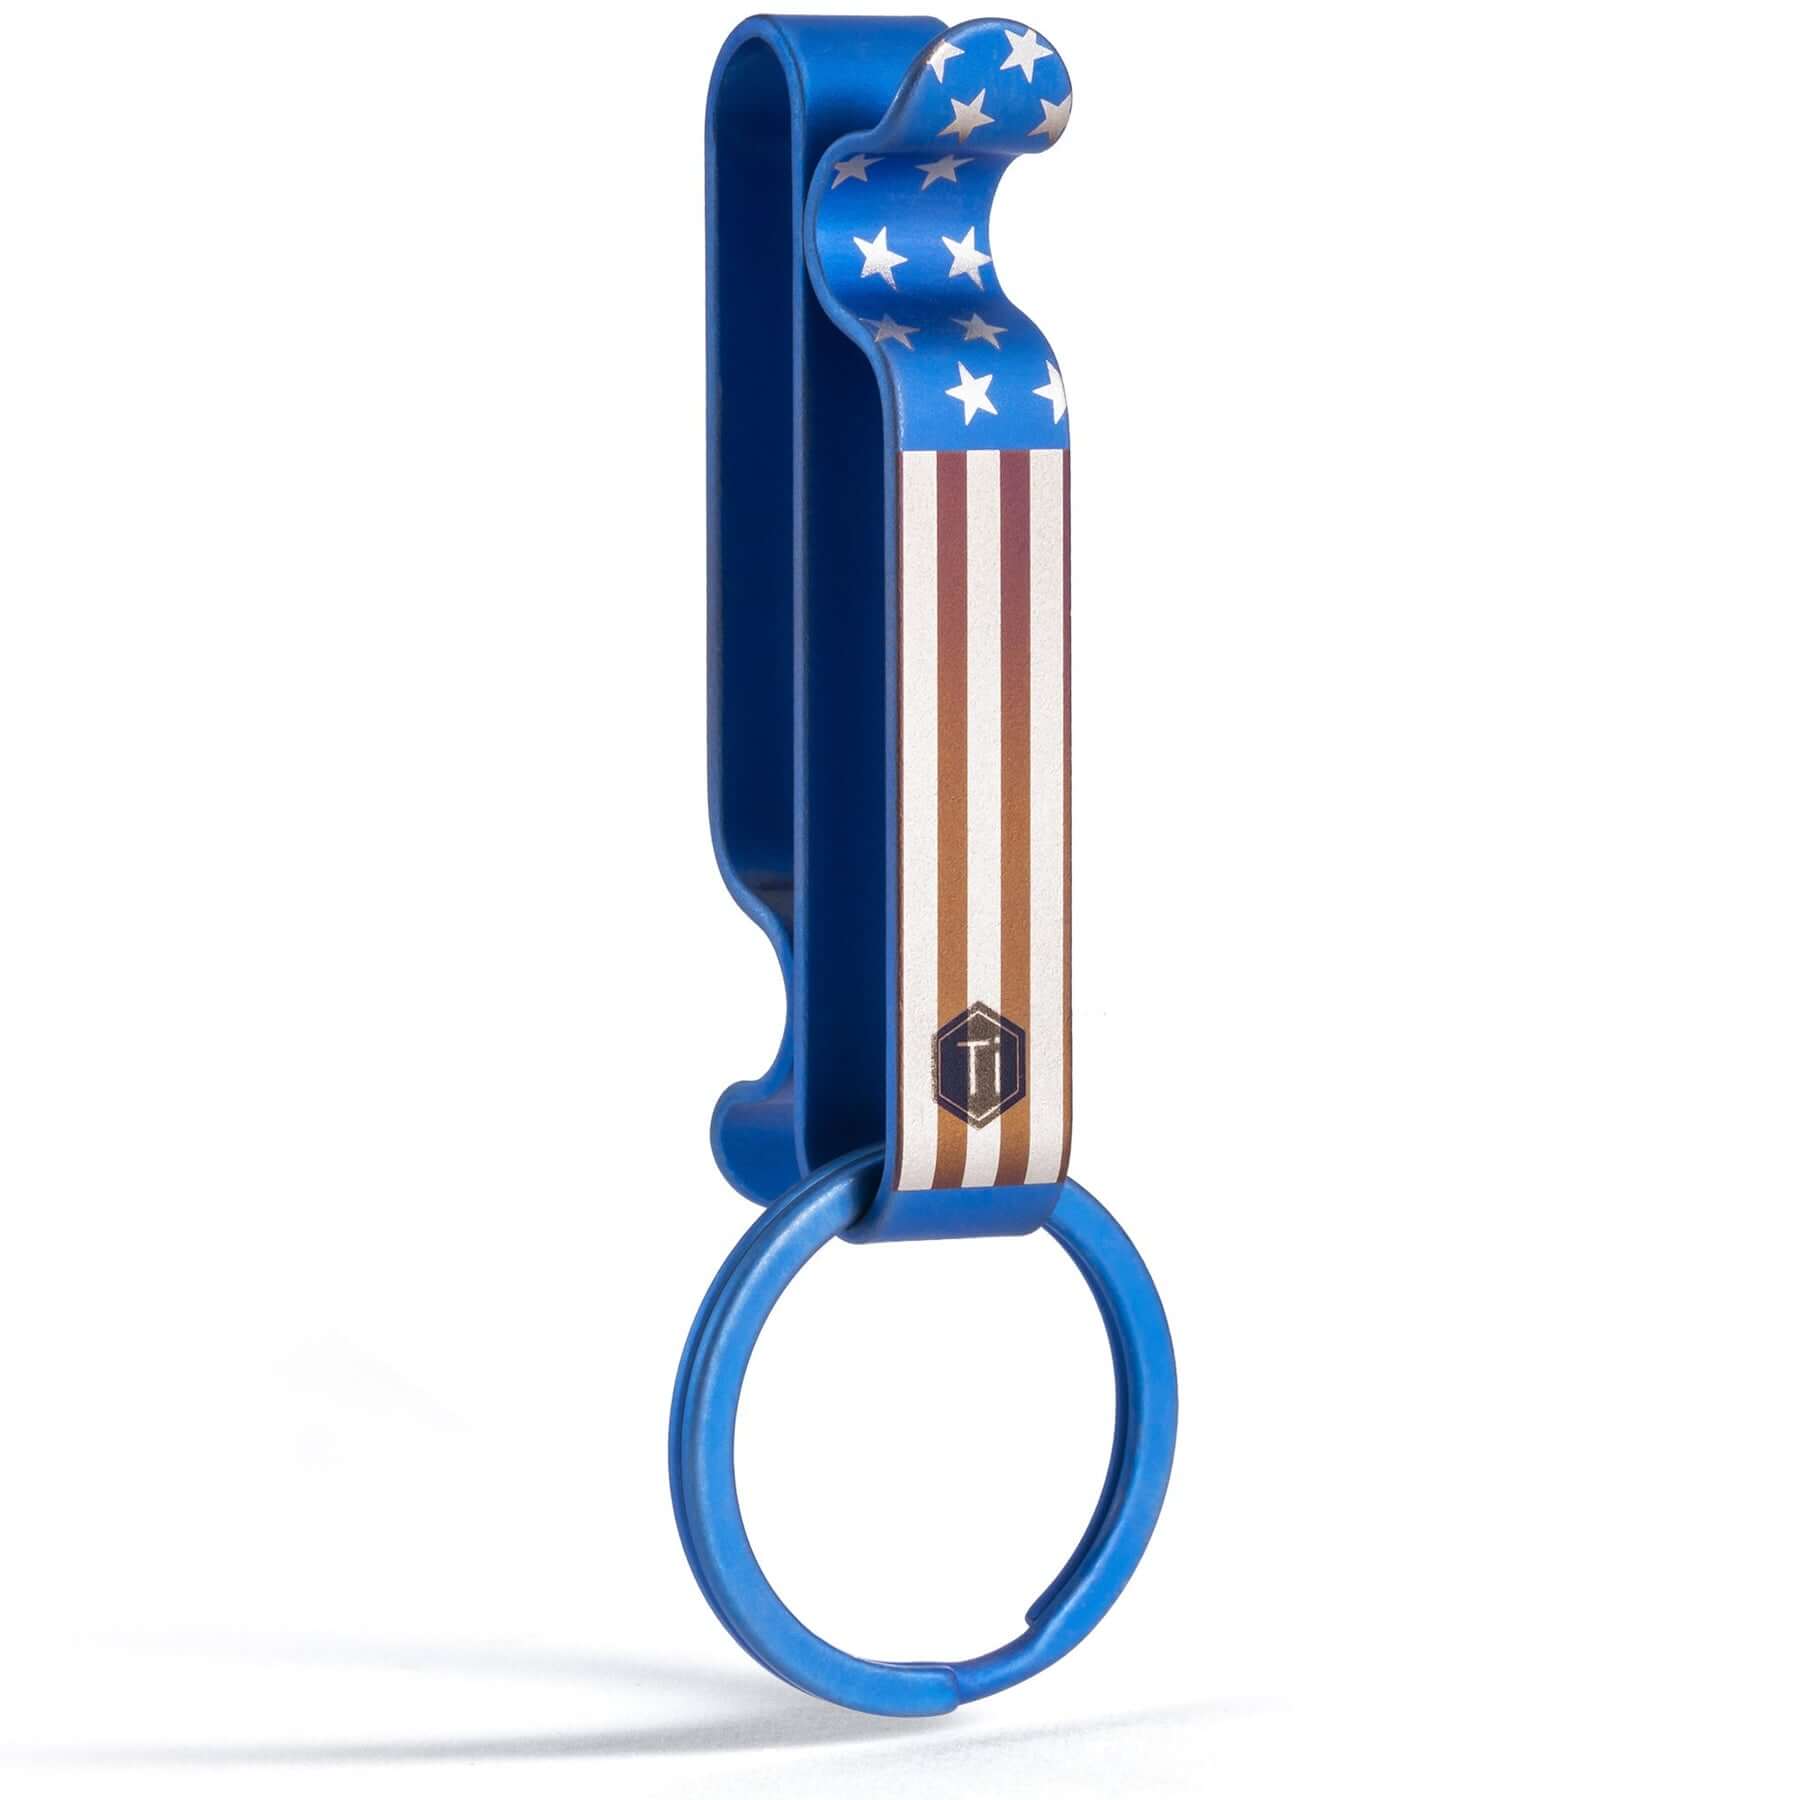 KeyUnity KM03 Titanium Keychain Clip Belt Loop Key Holder with